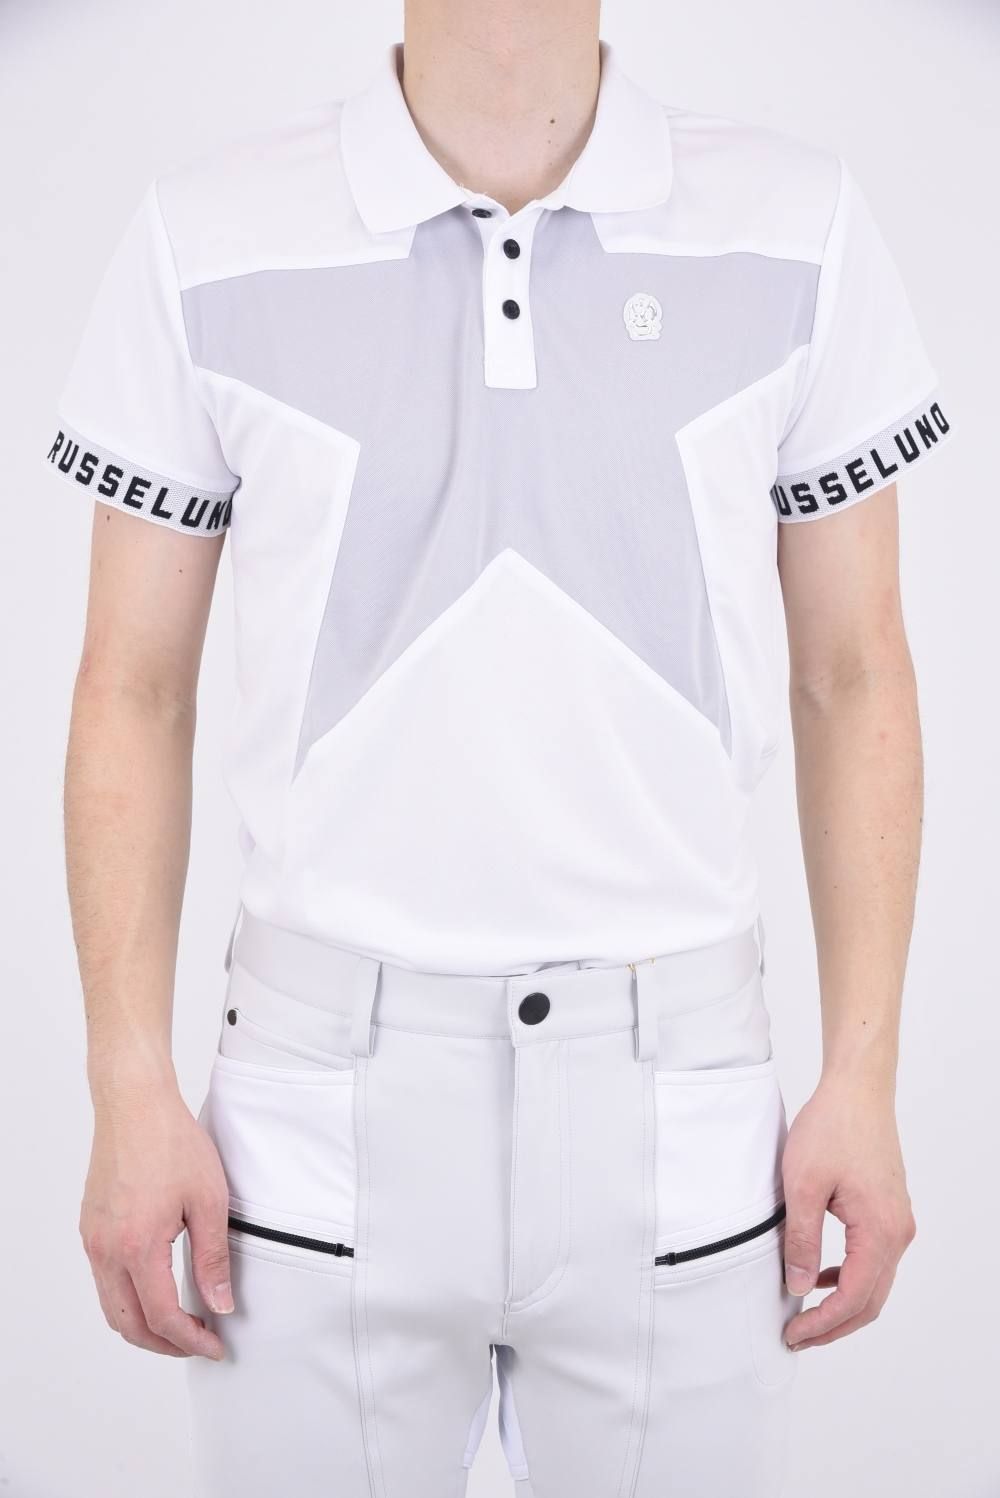 RUSSELUNO - BIG STAR POLO / スタープリント ポロシャツ ホワイト | GOSSIP GOLF